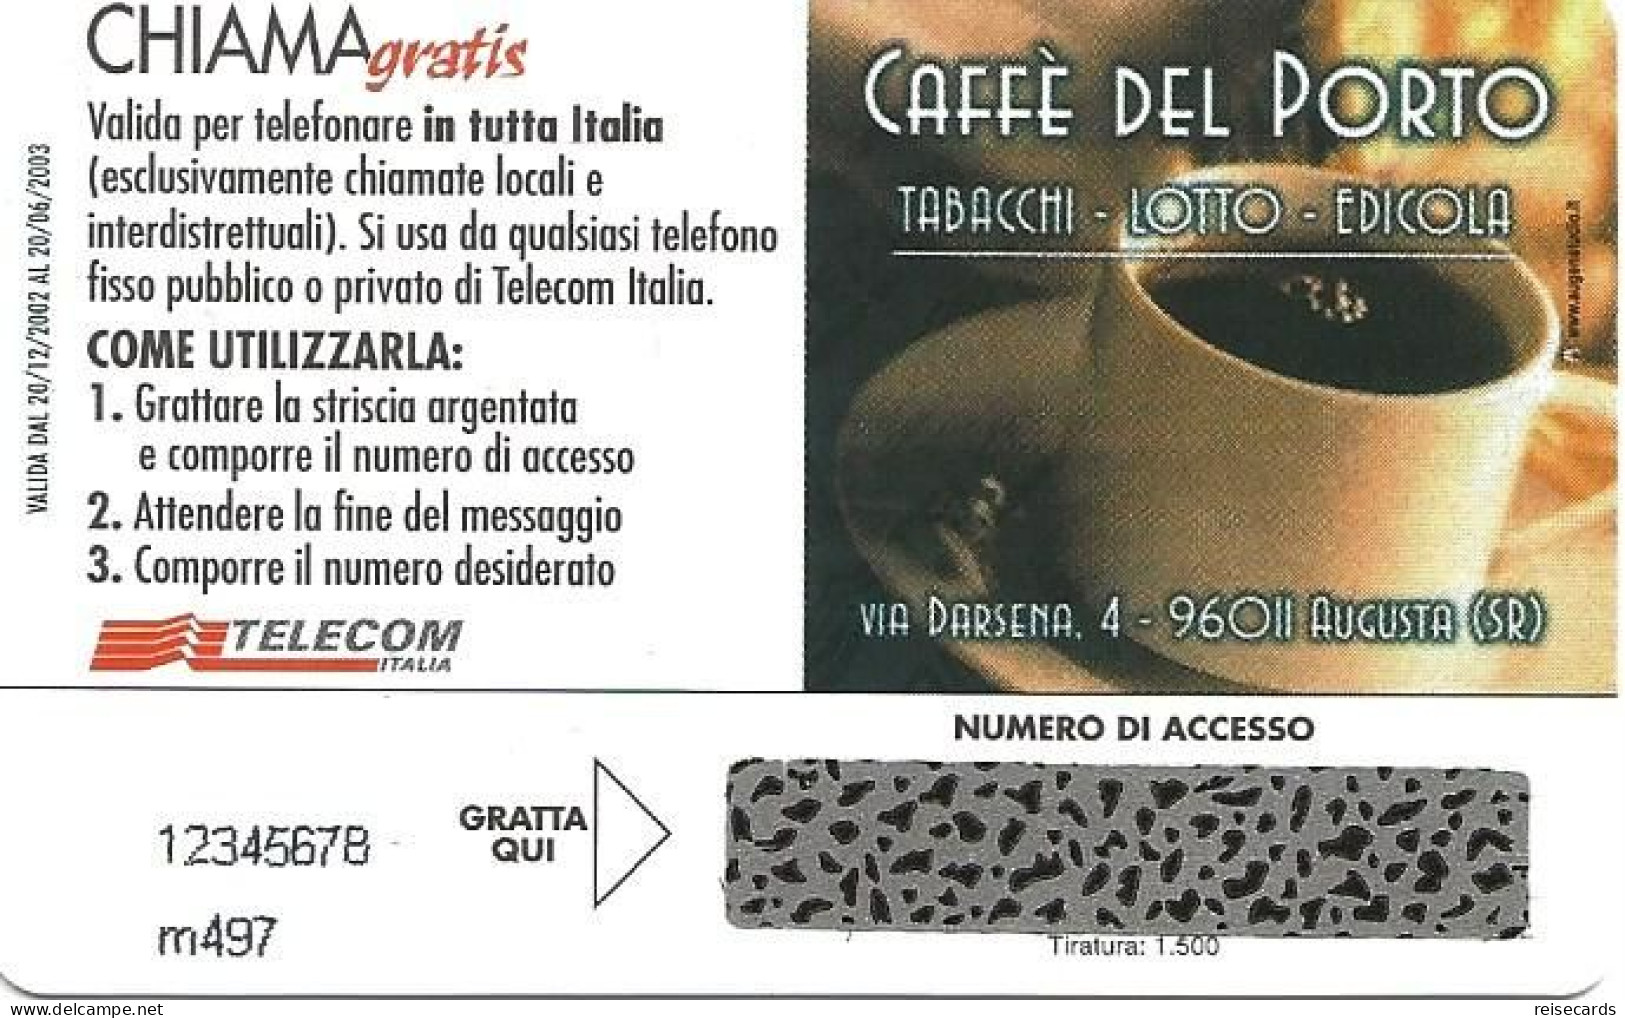 Italy: Telecom Italia Chiama Gratis - Caffé Del Porto. Mint - Public Advertising